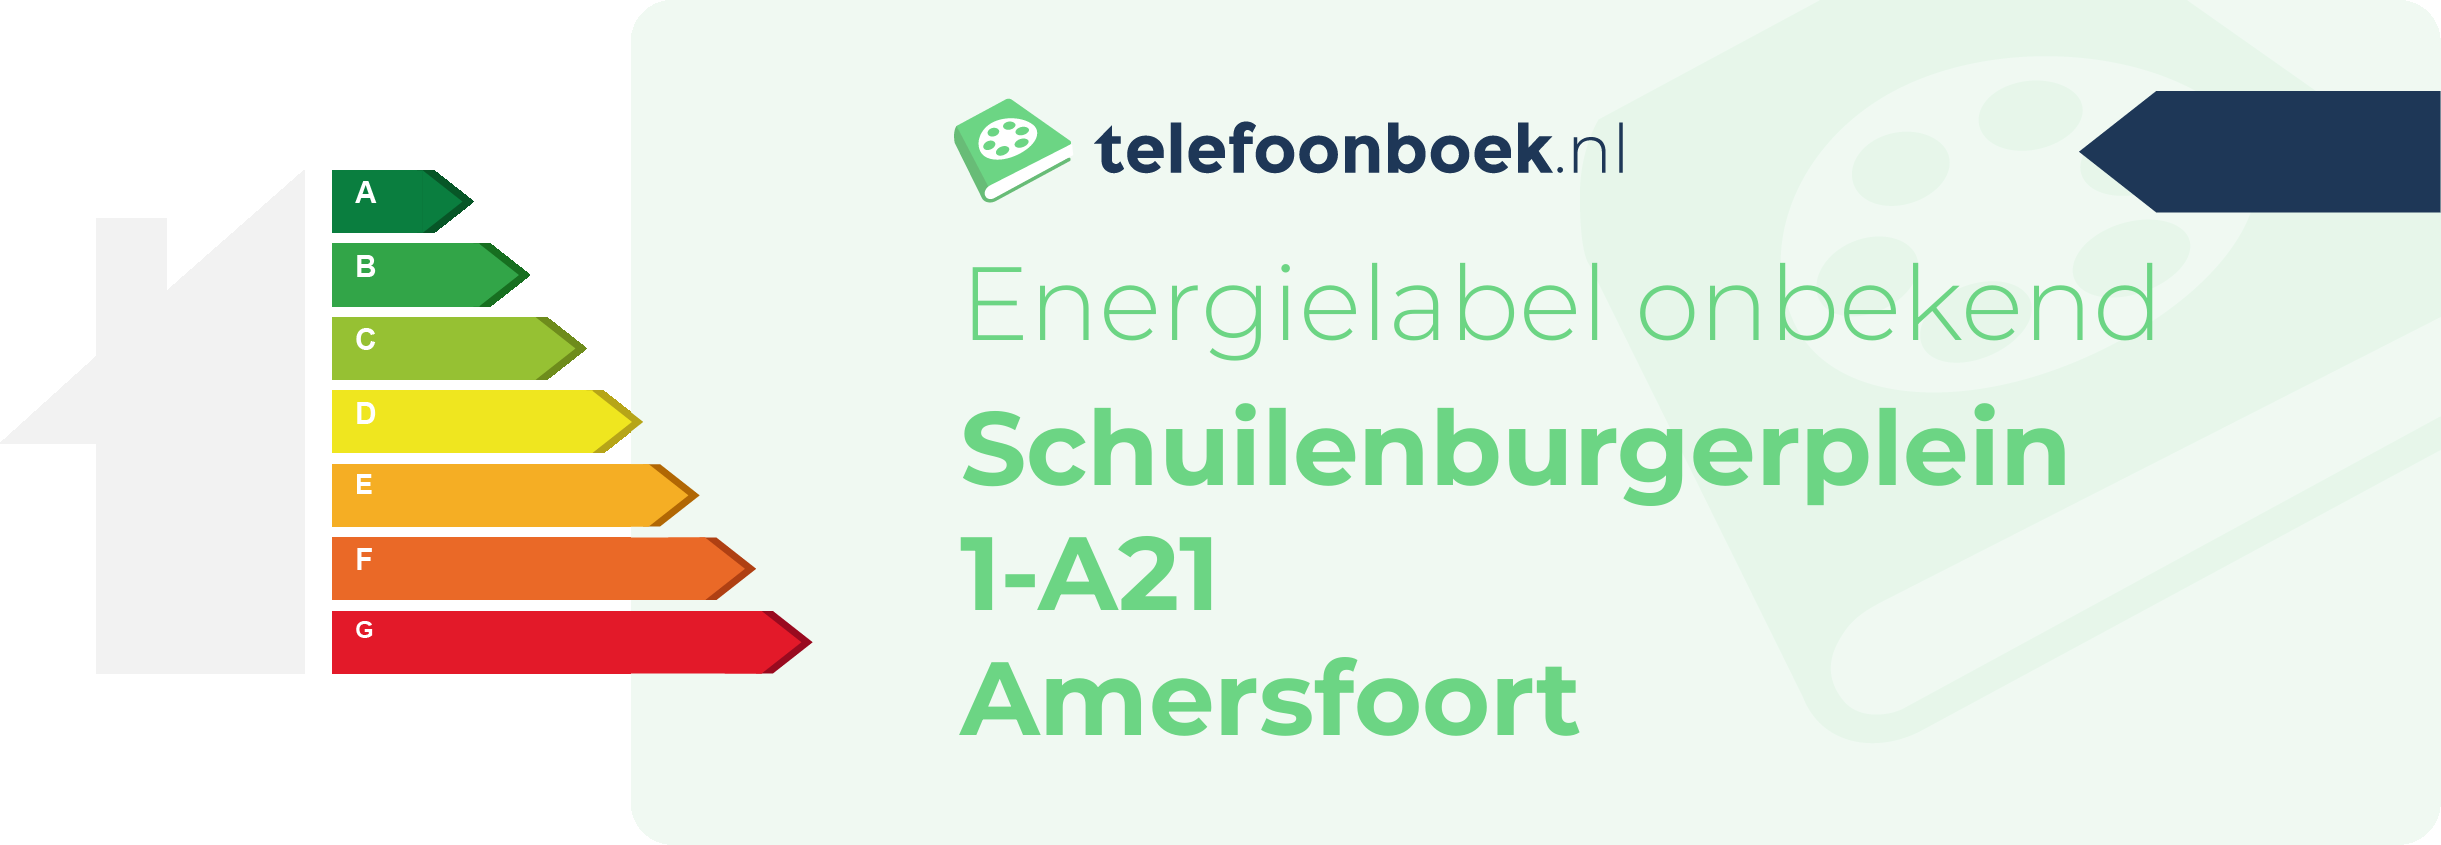 Energielabel Schuilenburgerplein 1-A21 Amersfoort